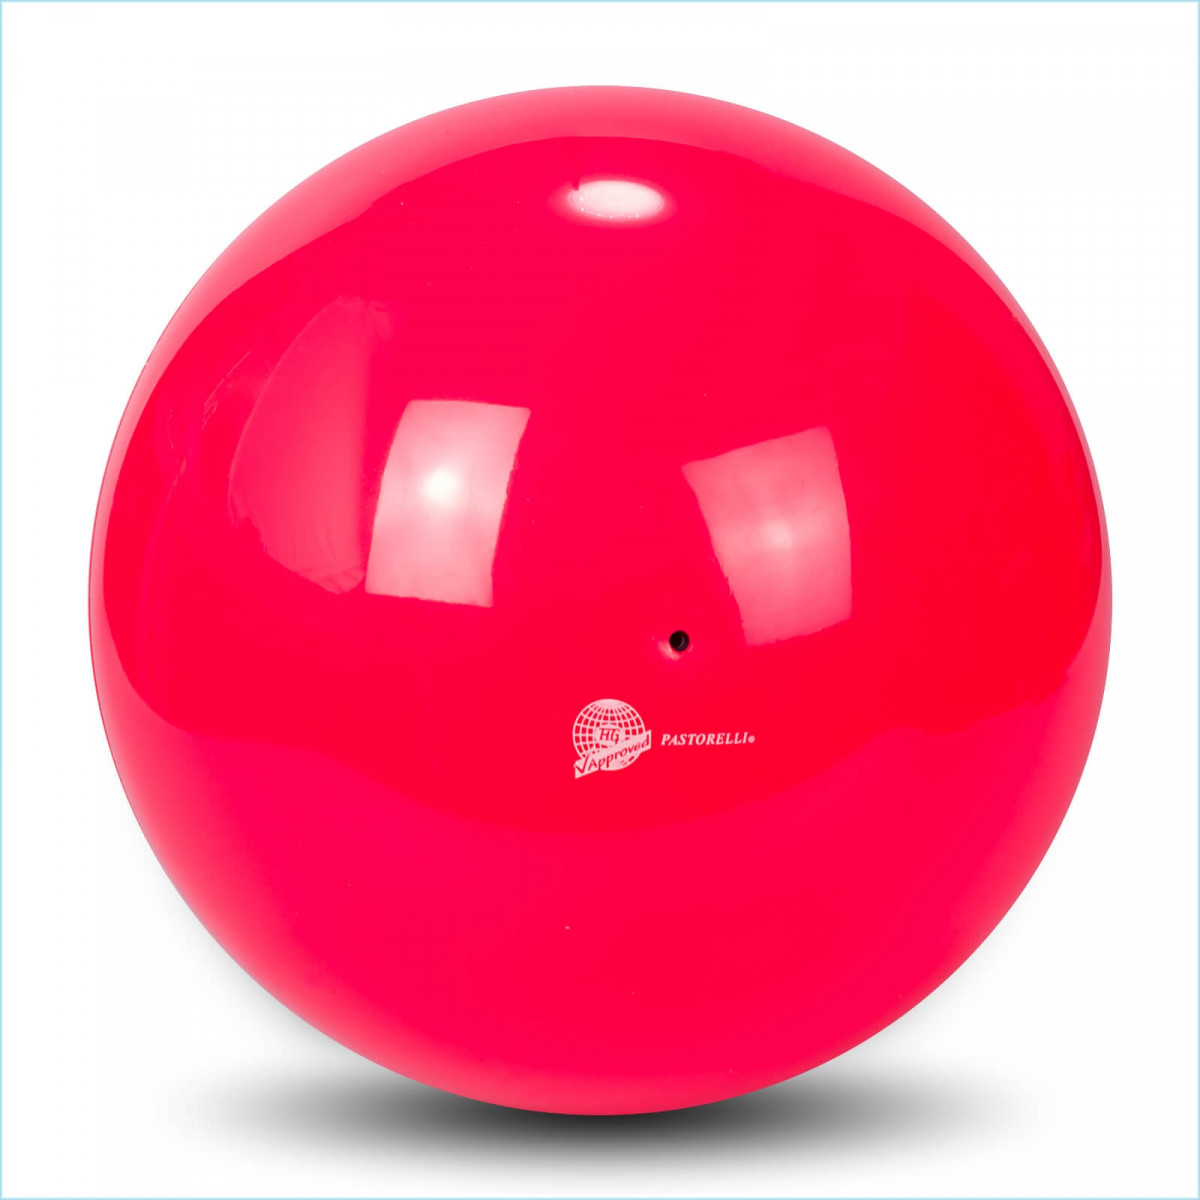 Мяч 18 см Pastorelli NEW GENERATION цвет Коралловый Артикул 03910